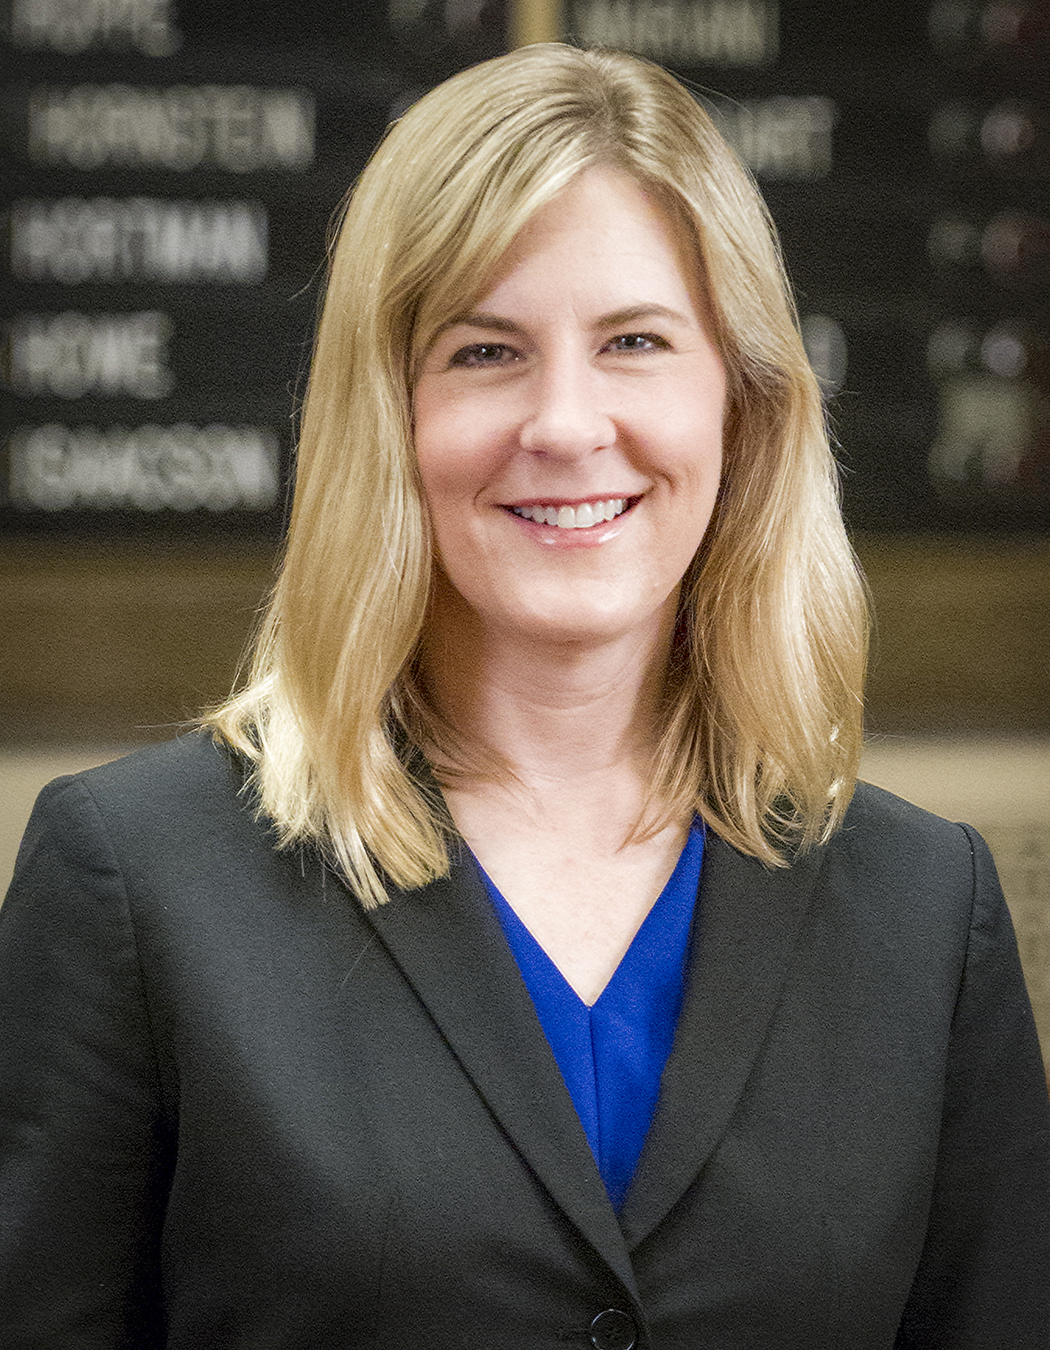 Melissa Hortman (DFL) 36B - Minnesota House of Representatives